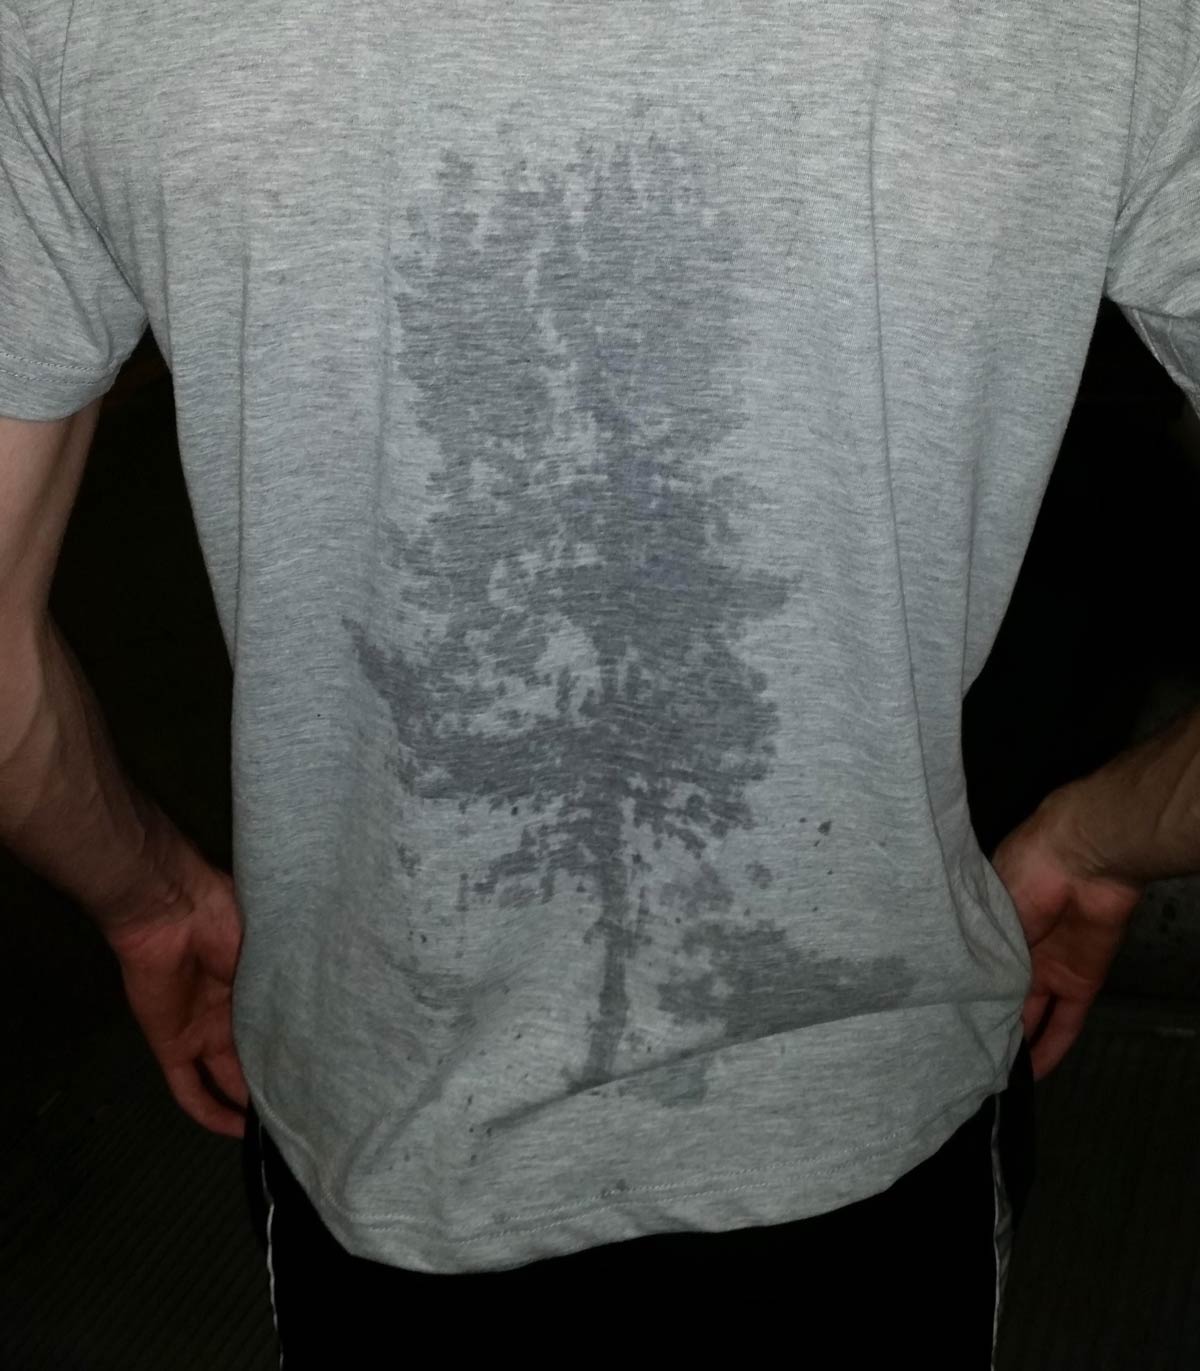 My friend's back sweat looks like a tree